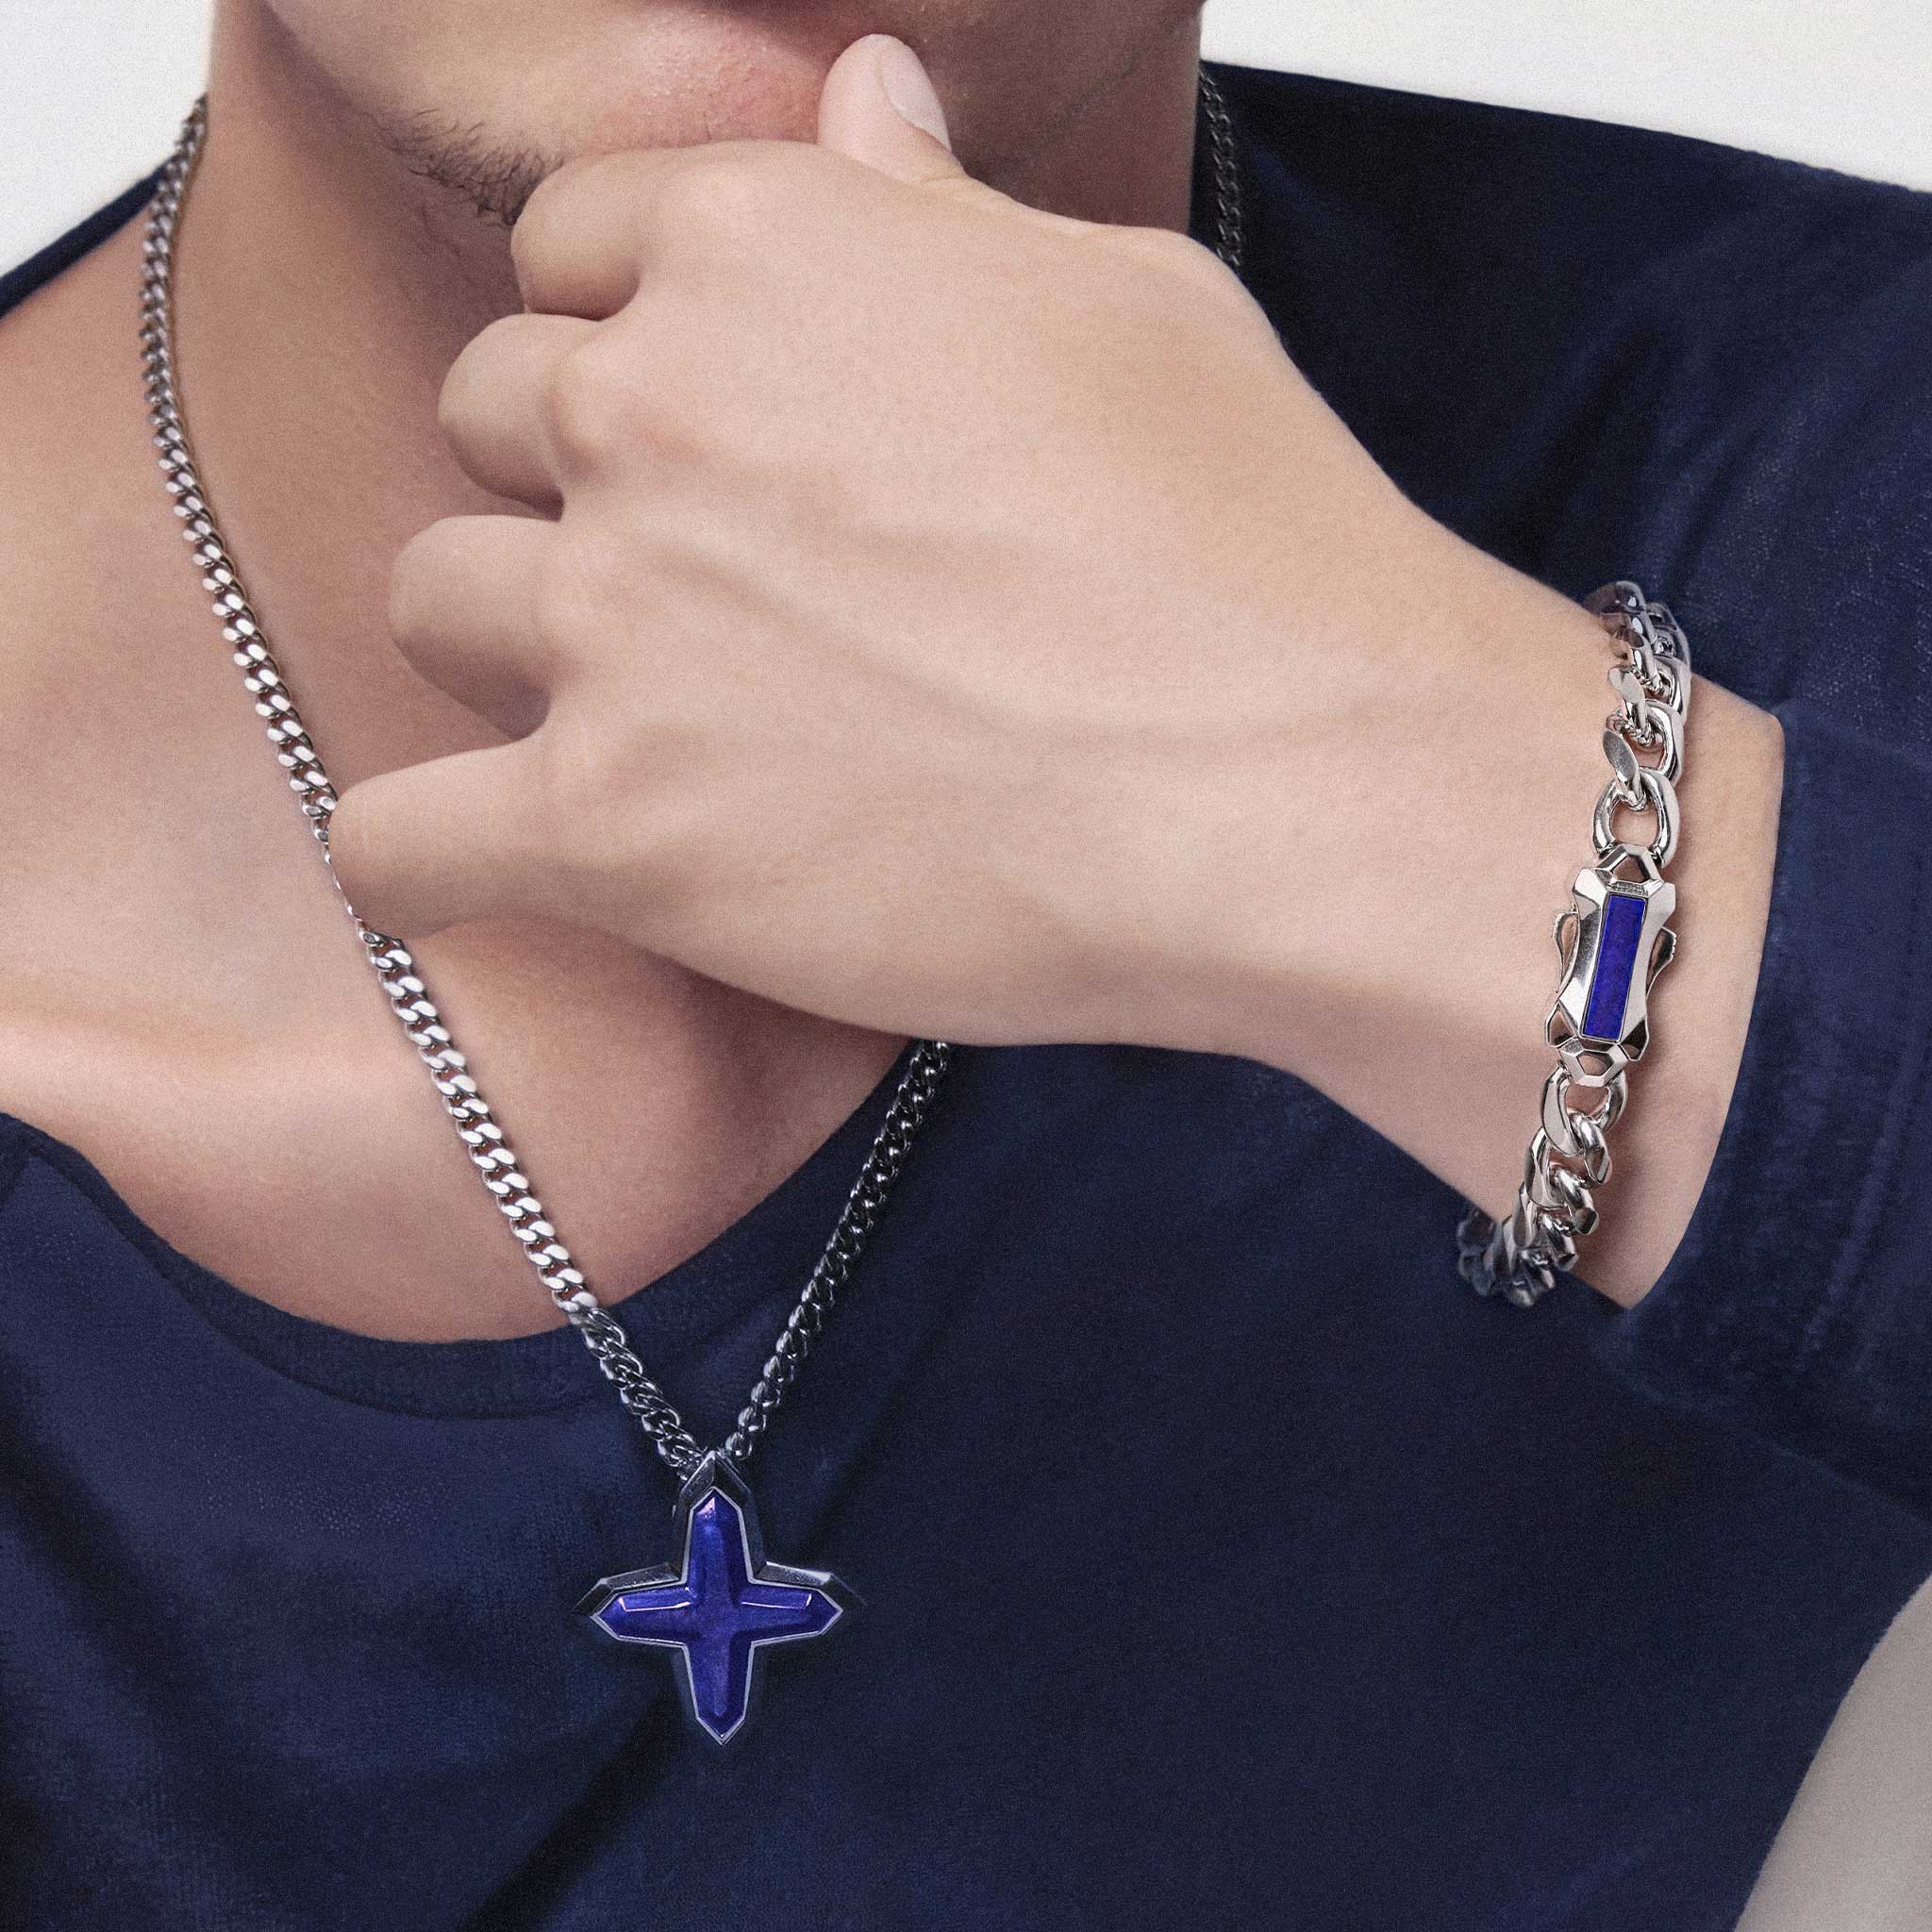 Men's Silver Chain Bracelet with Lapis Lazuli Bracelets WAA FASHION GROUP 